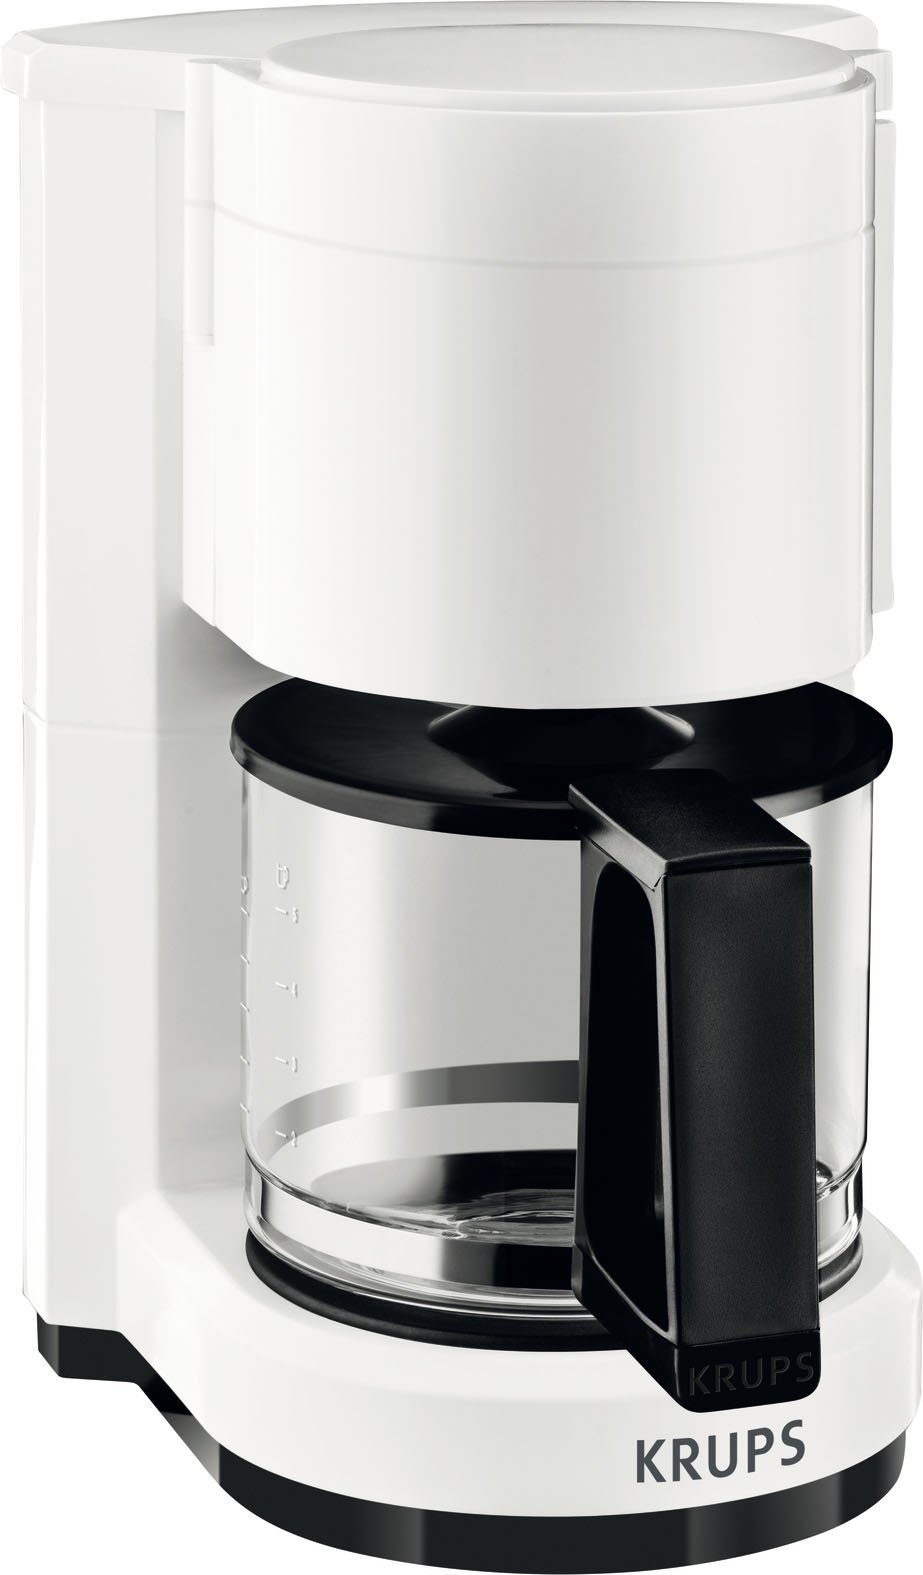 Krups Warmhaltefunktion 0,6l herausnehmbarer für Kaffeekanne, 5-7 Kaffee, Filterhalter, Aromacafe, Filterkaffeemaschine F18301 Tassen